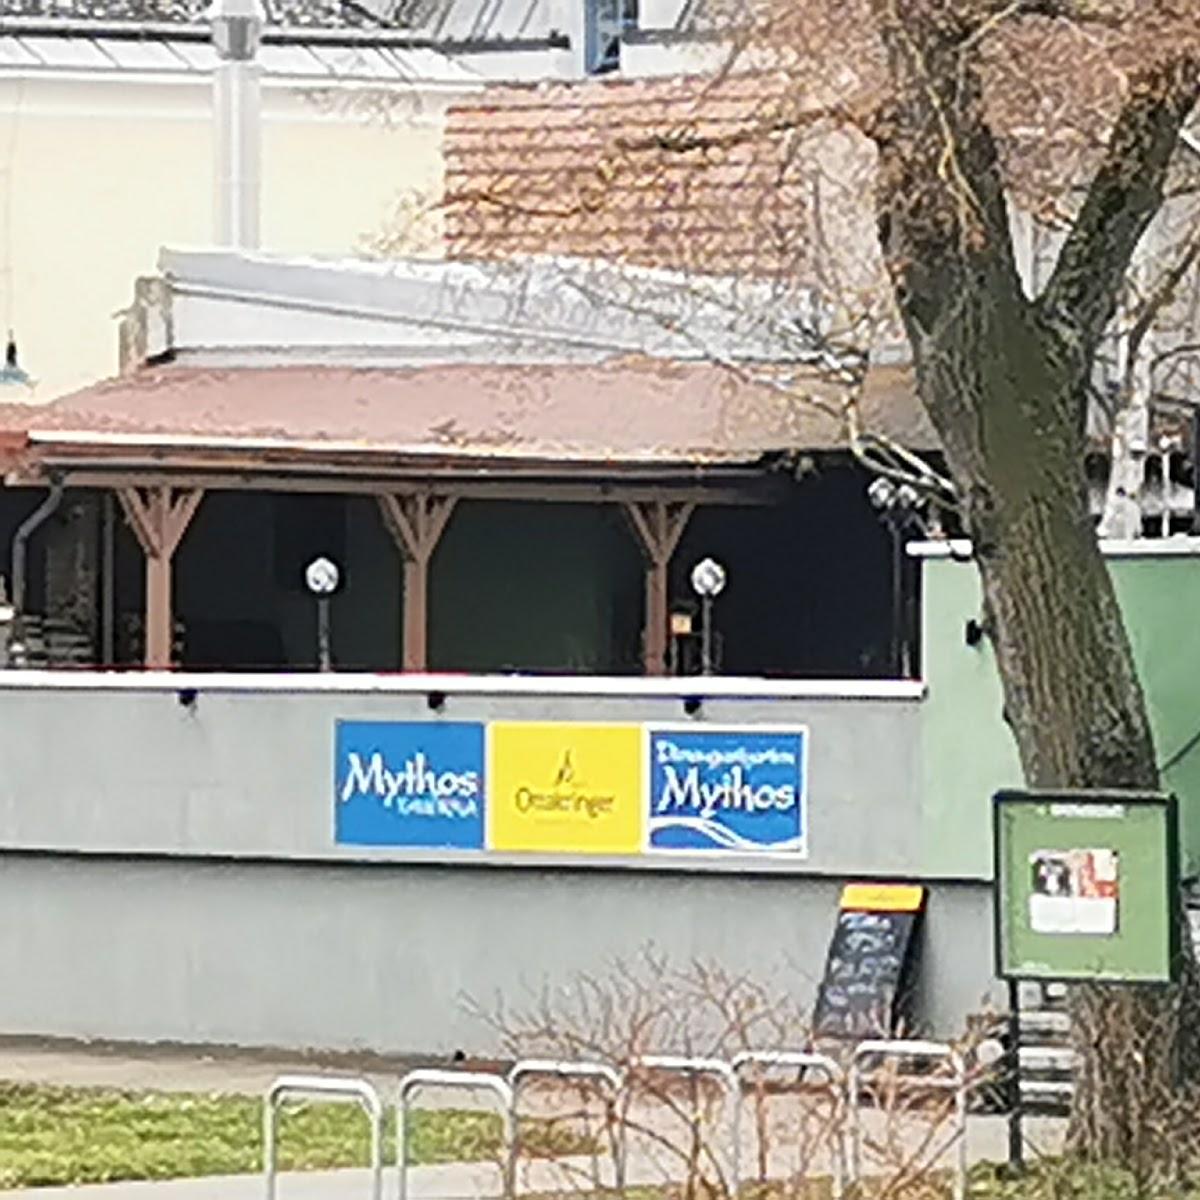 Restaurant "Taverna Mythos" in Tulln an der Donau